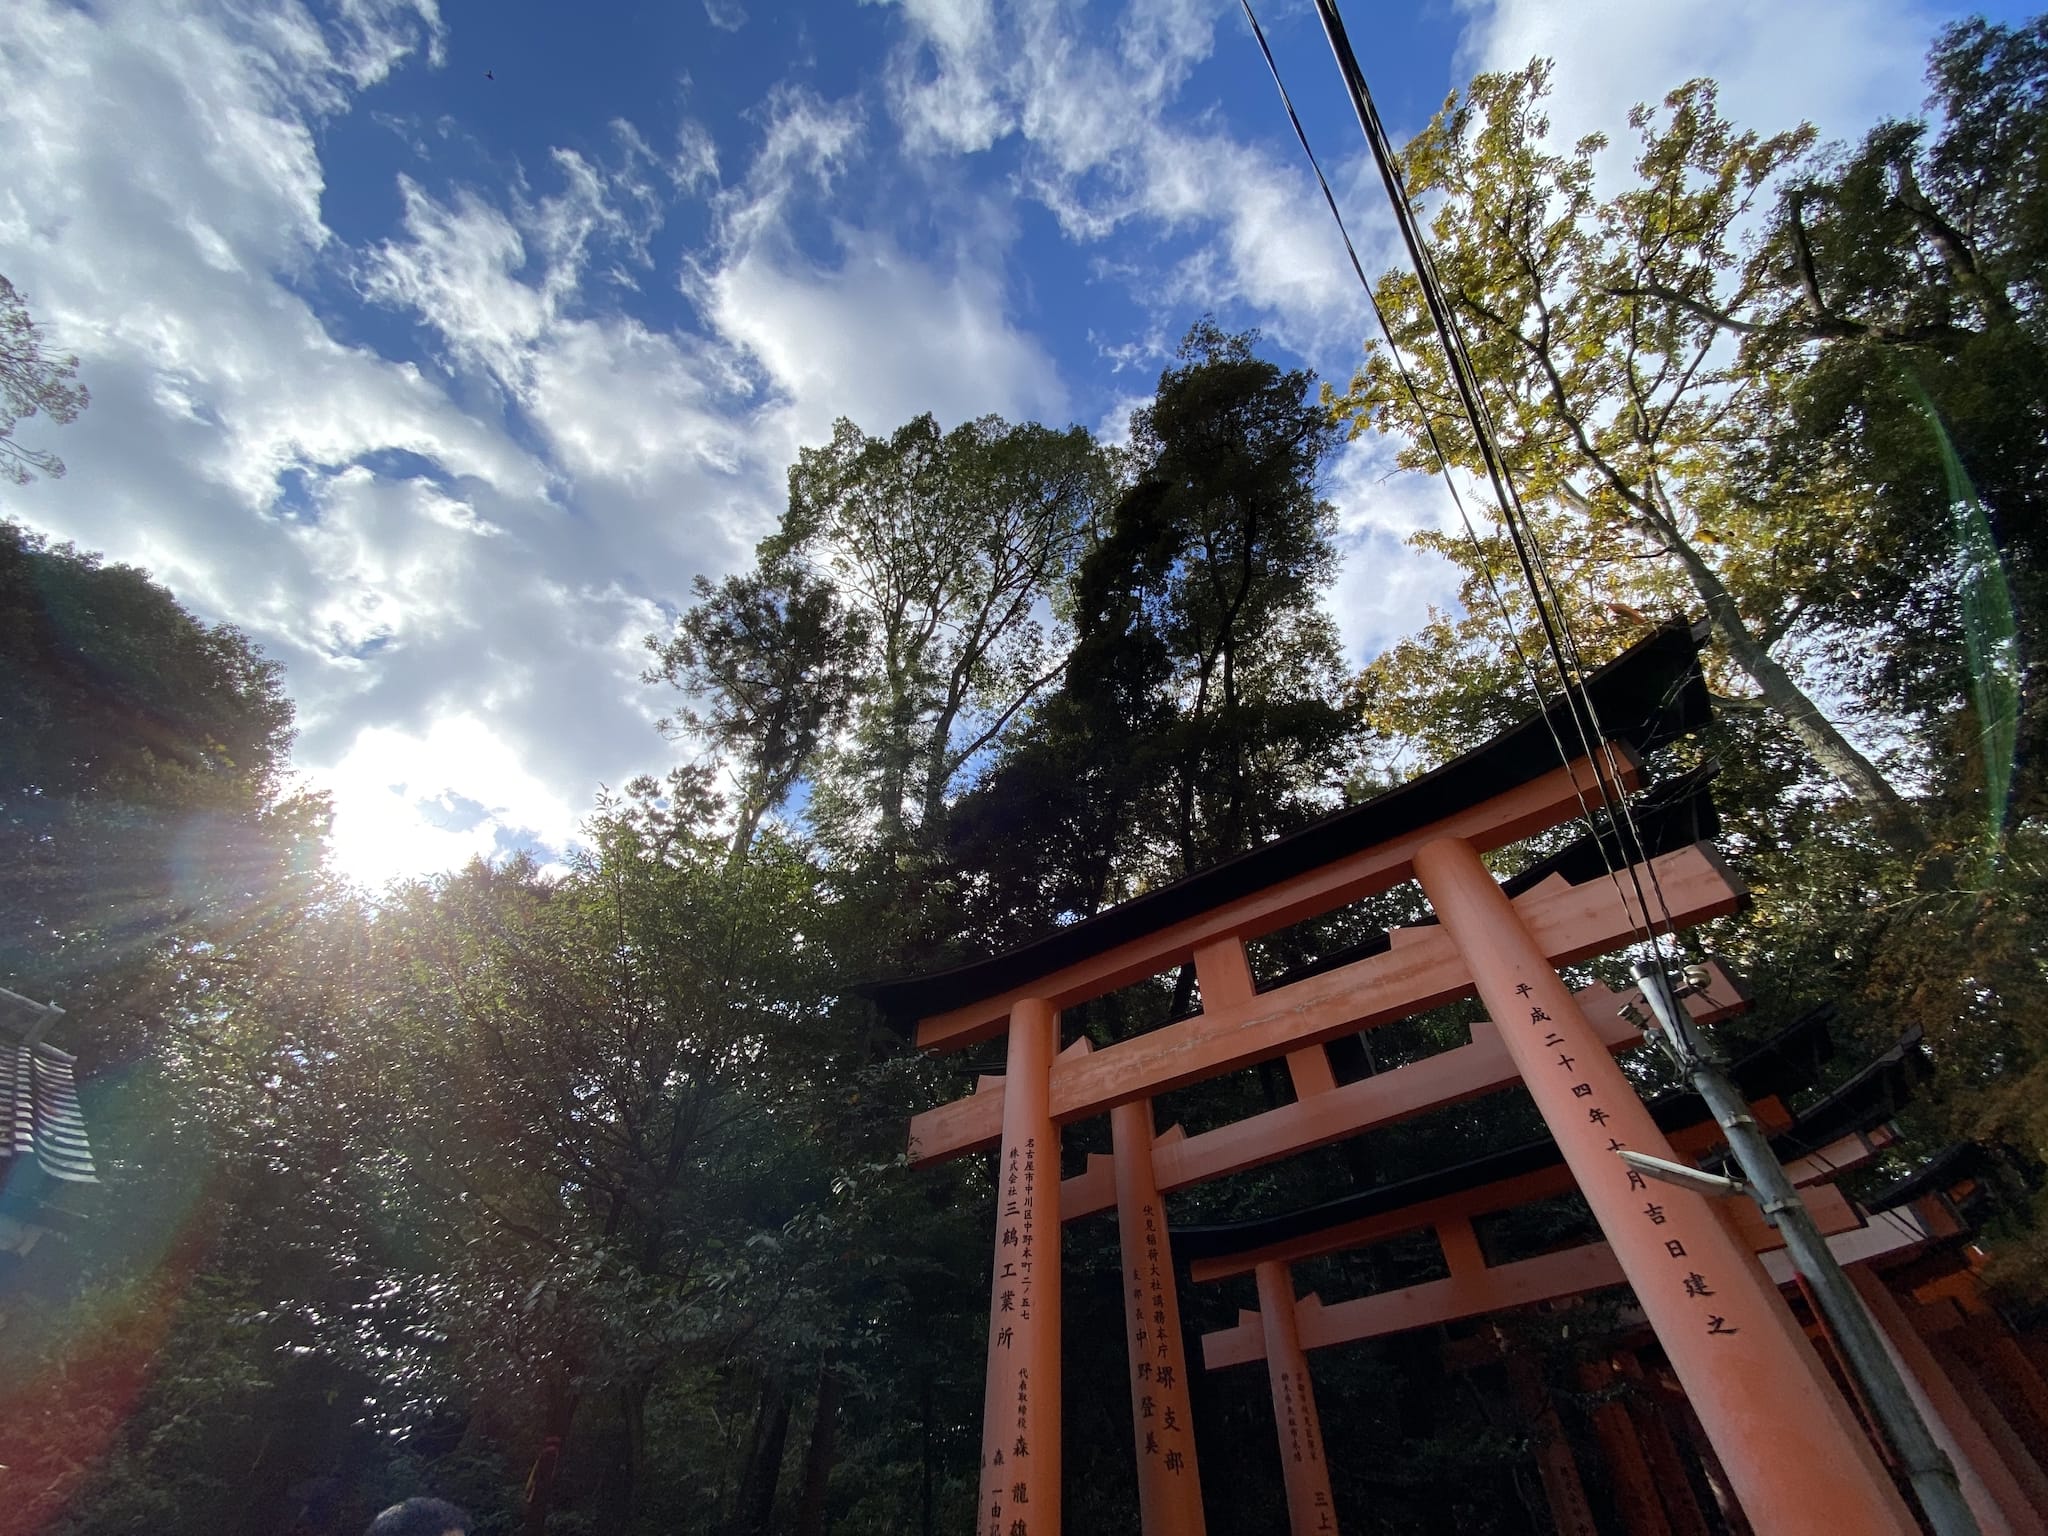 Fushimi Inari Taisha, gates, trees and blue sky